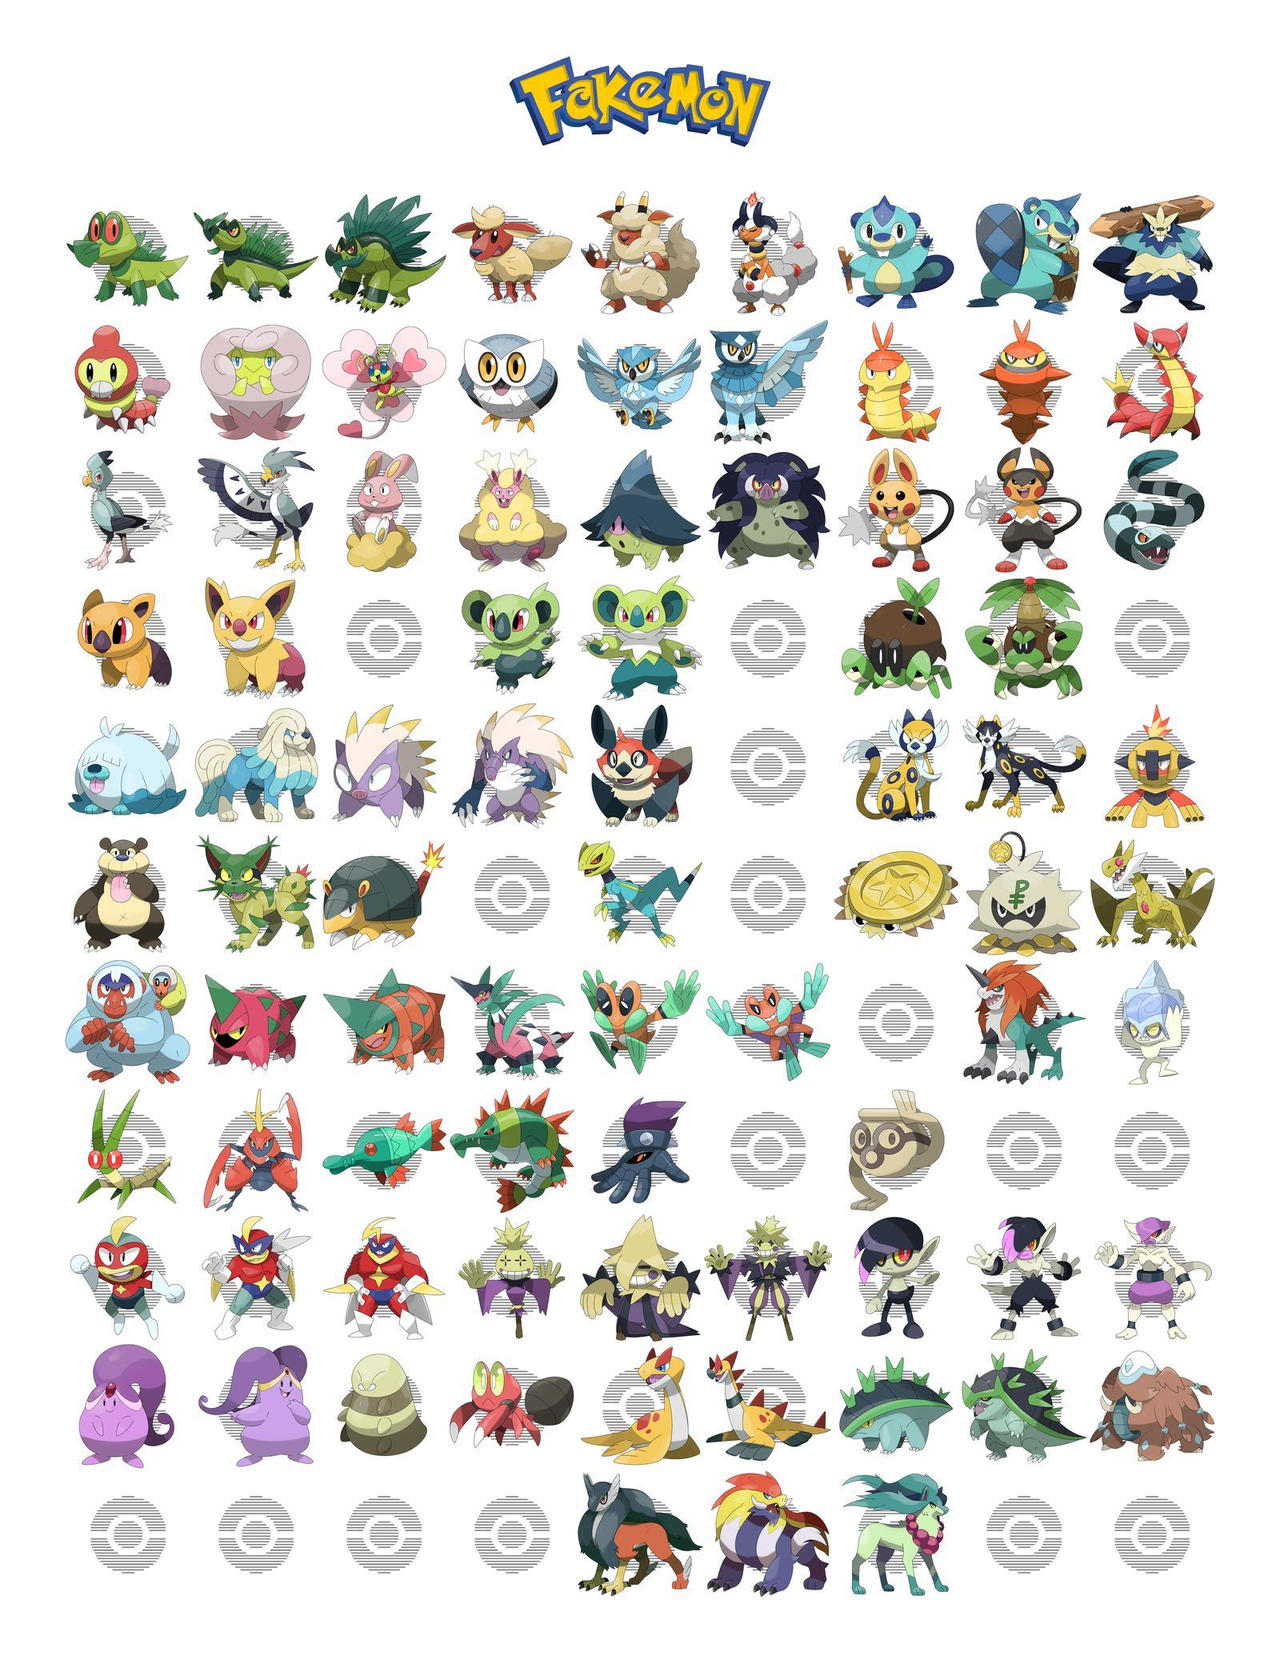 Pokemon Favorites by Primary type - Gen 8 by AdeptCharon on DeviantArt